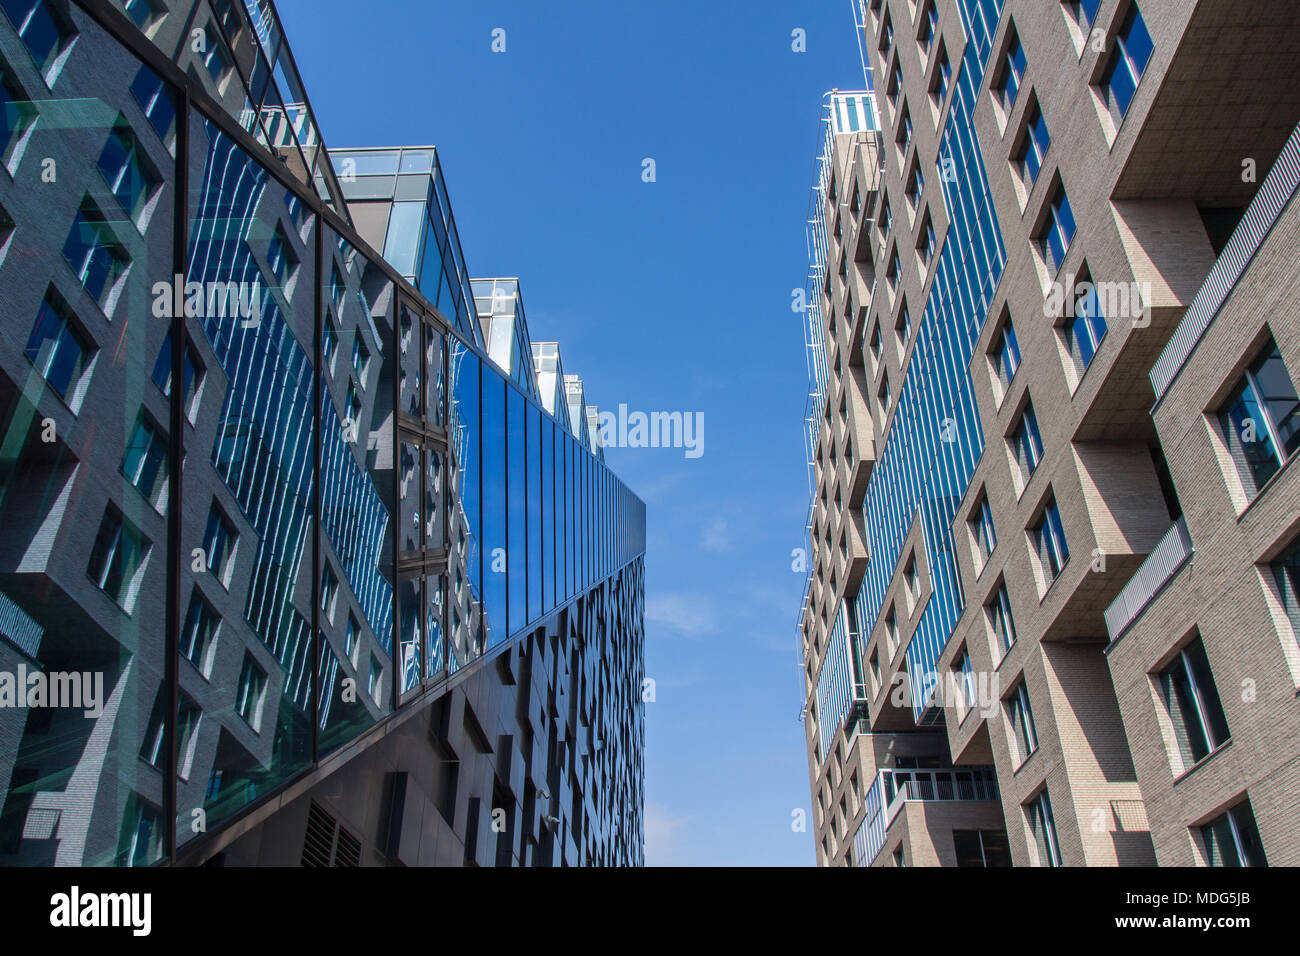 Bar Code, Oslo, Arkitektur, moderne arkitektur, glass, metall, betonf, tre  Stock Photo - Alamy